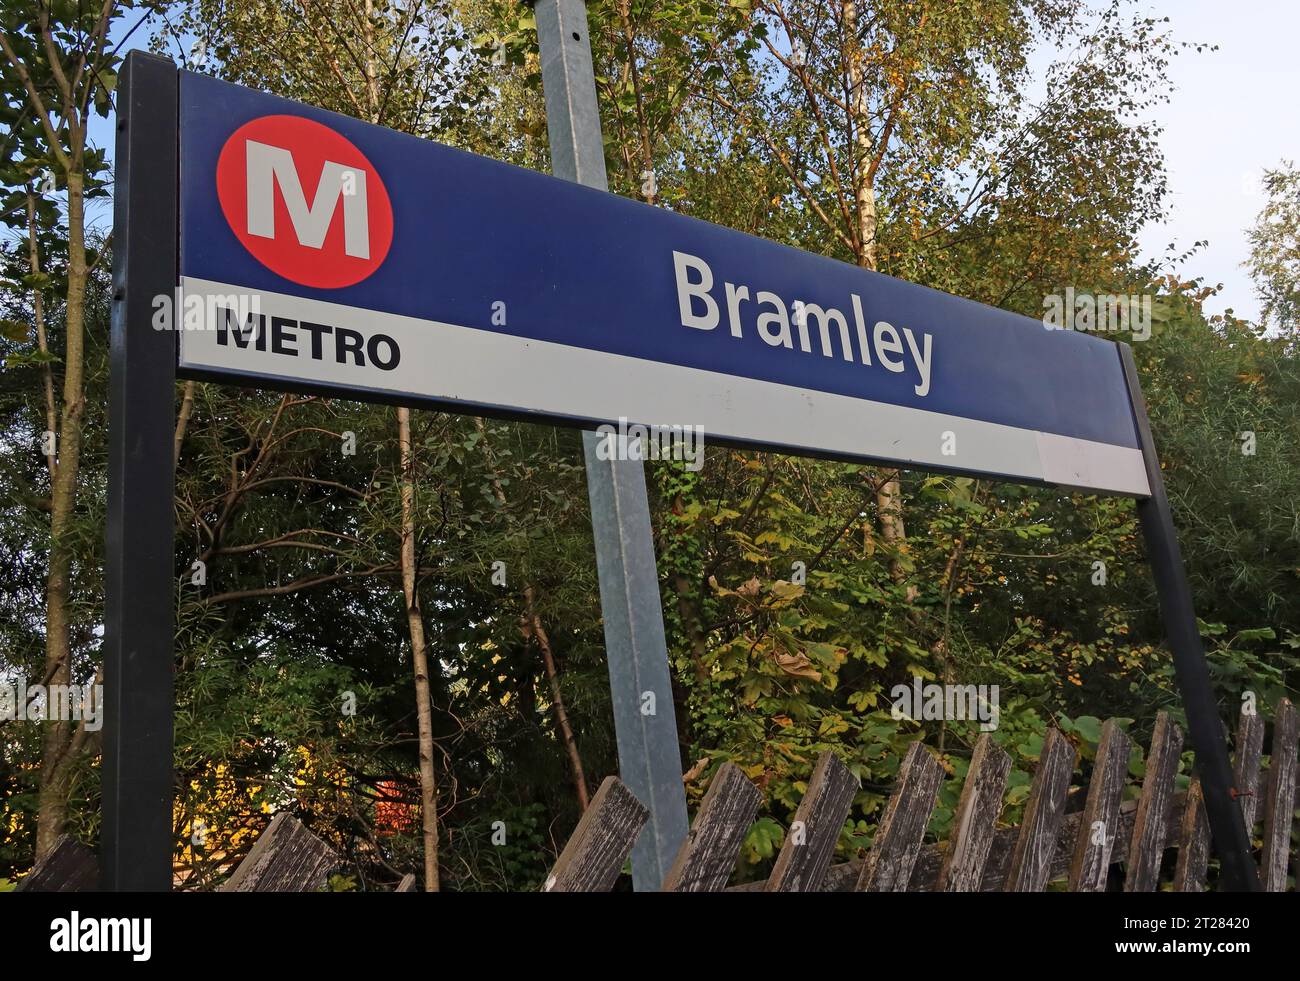 Stazione ferroviaria di Bramley, parte della rete metropolitana West Yorkshire, Swinnow Road, Bramley, West Yorkshire, LS13 4DU Foto Stock